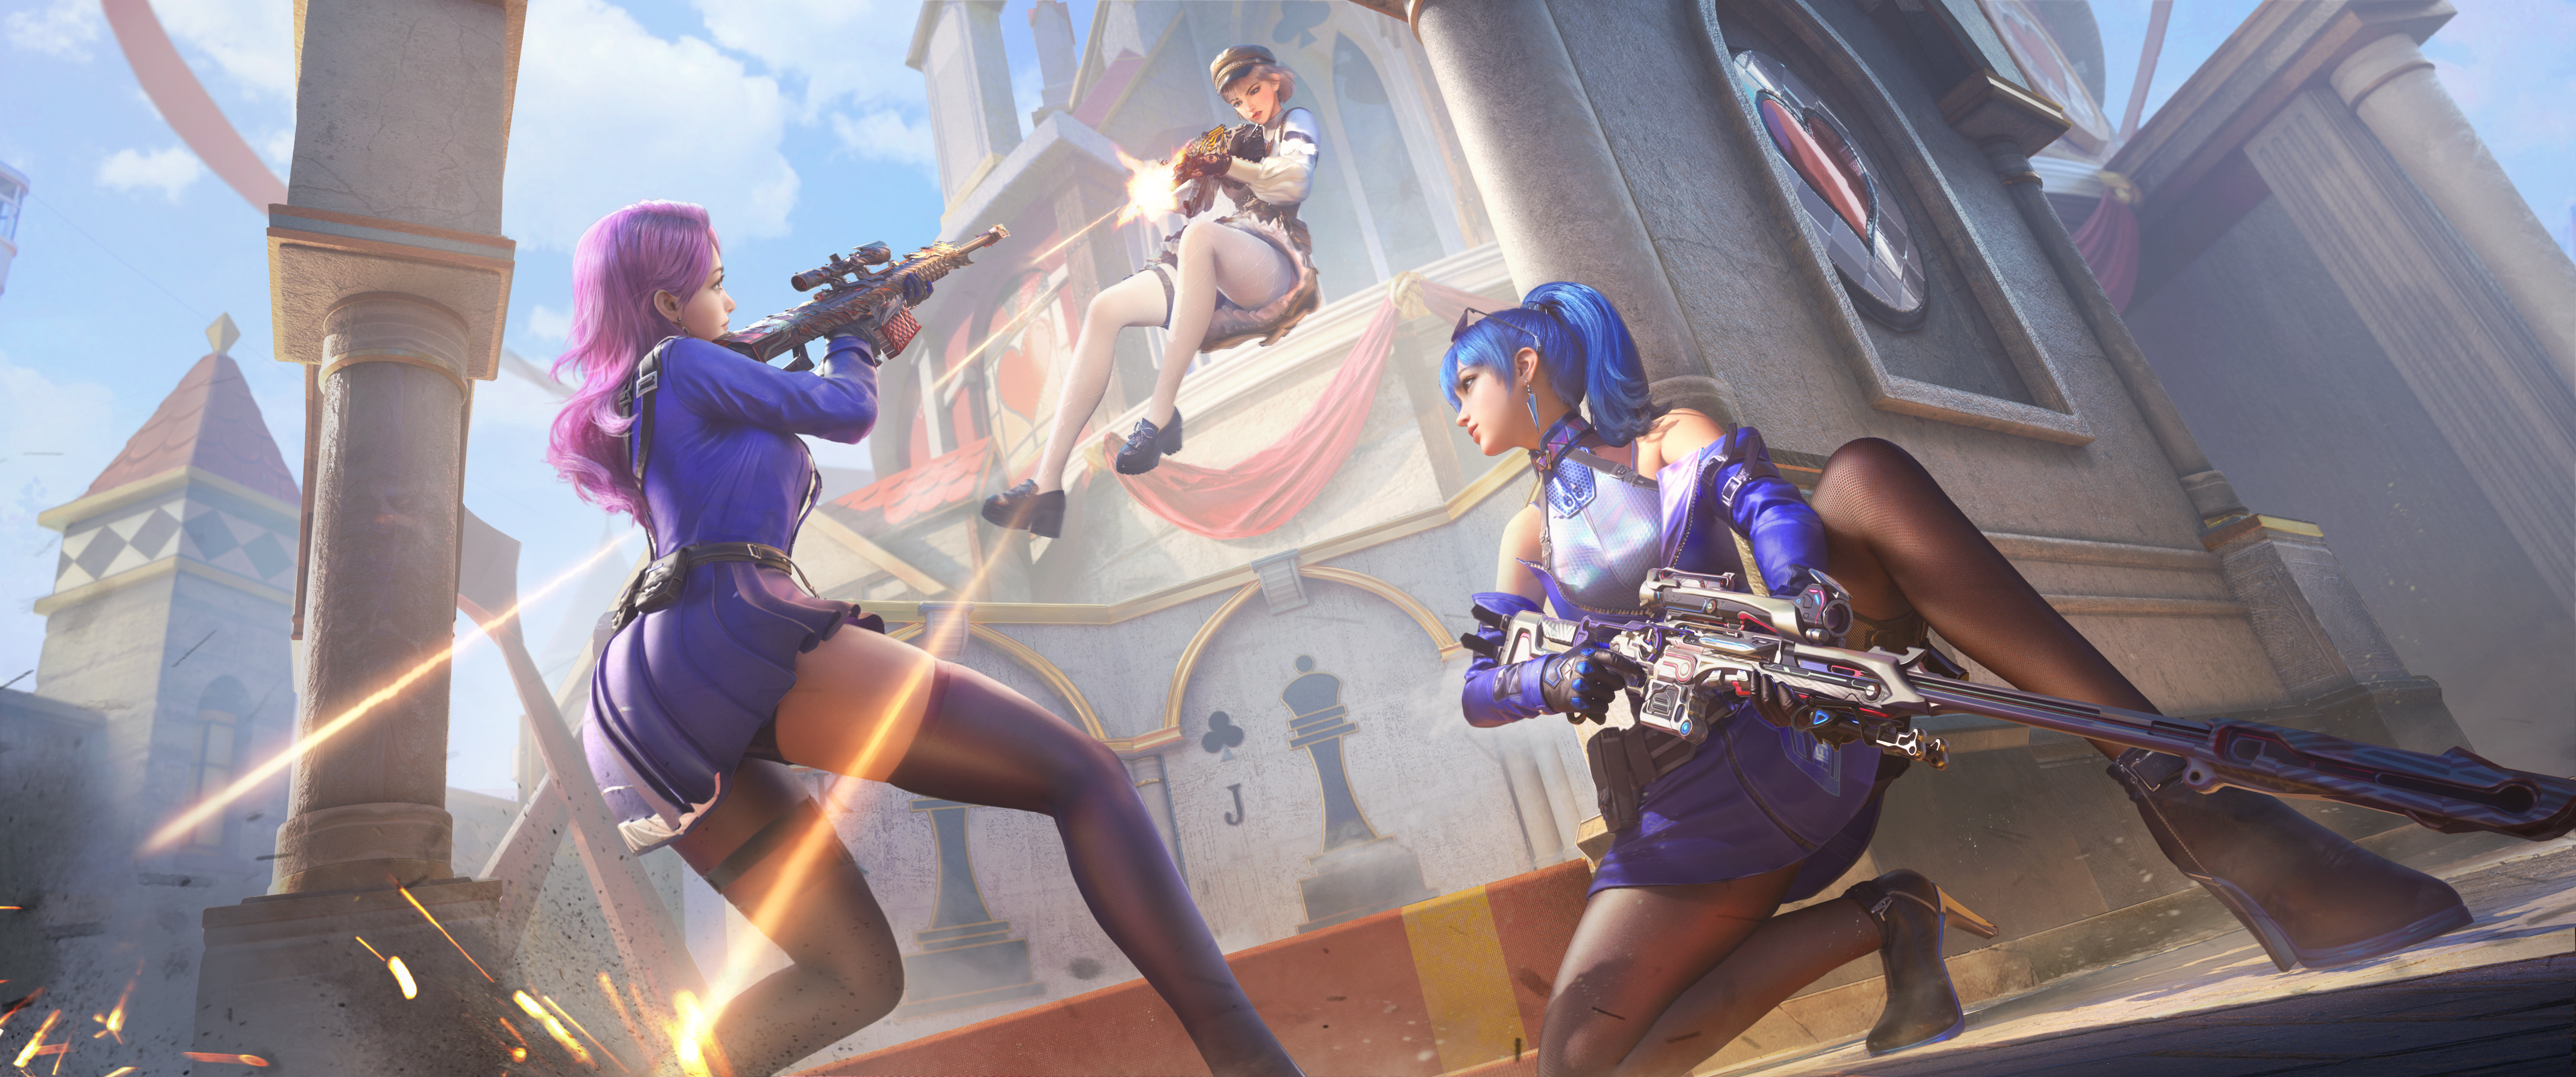 CrossFire Video Game Girls Weapon Fighting Barrett Skirt Blue Hair Purple Hair Sunglasses Video Game 5313x2222